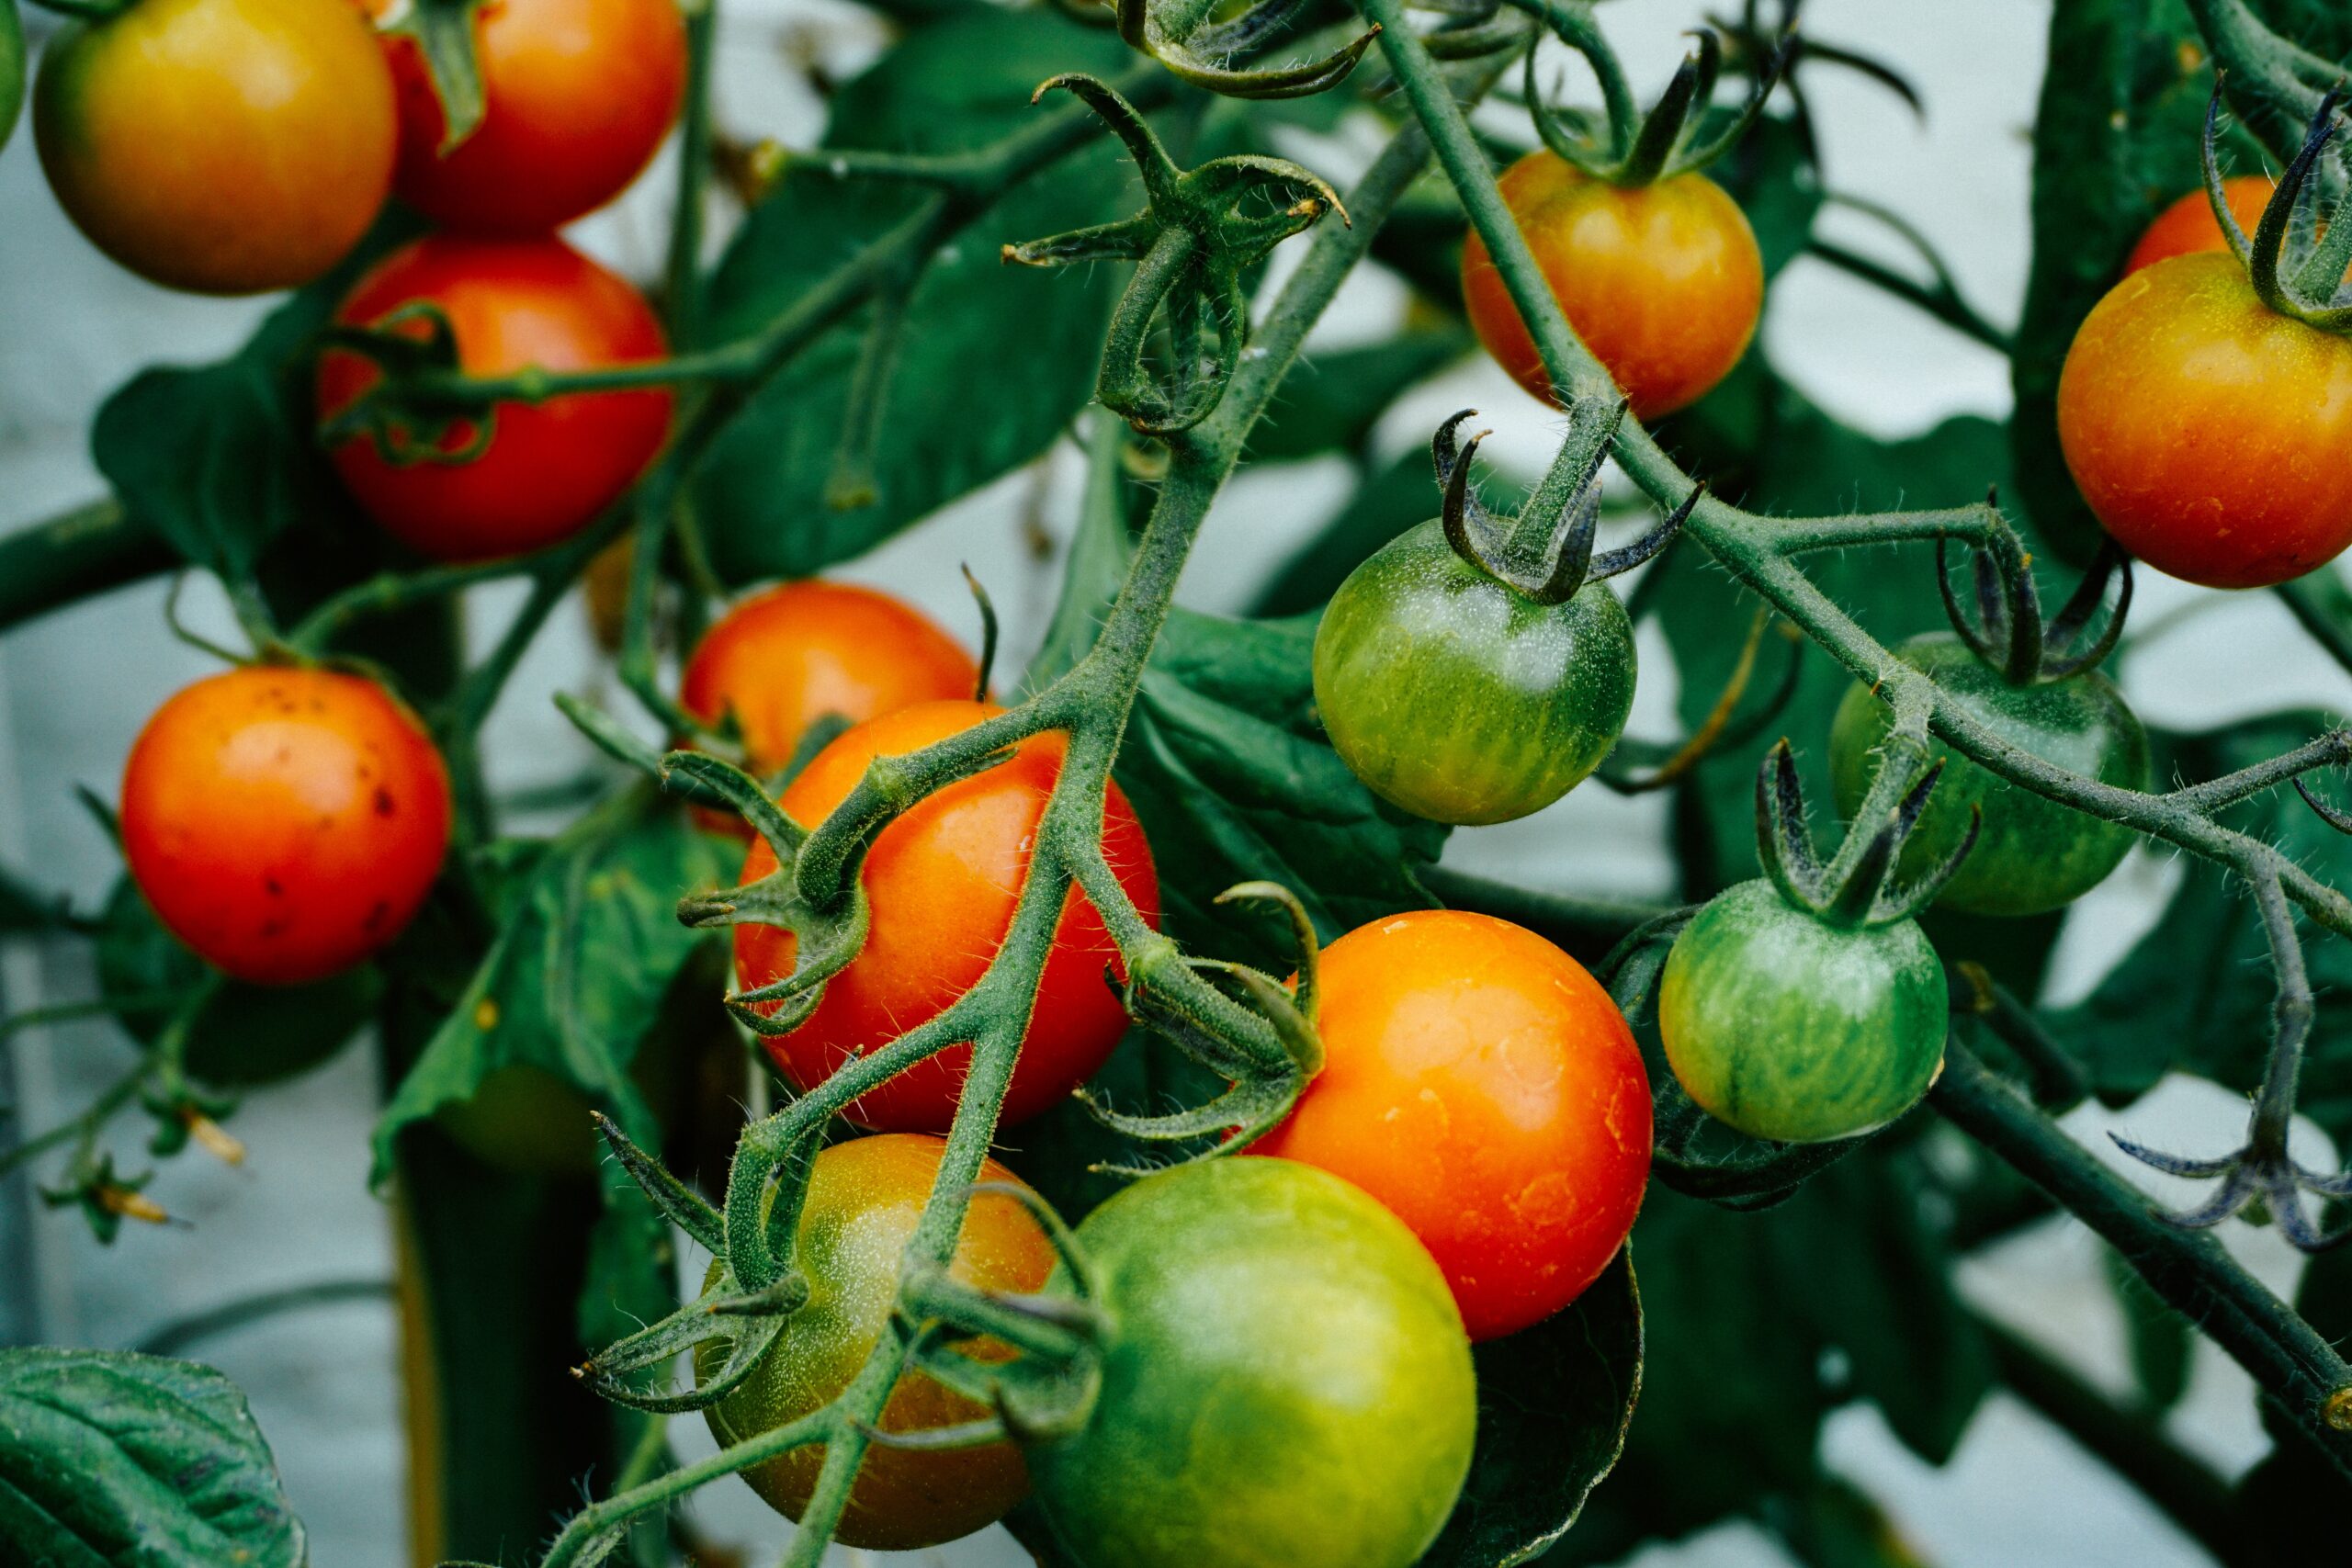 Pruning Tomato Plants